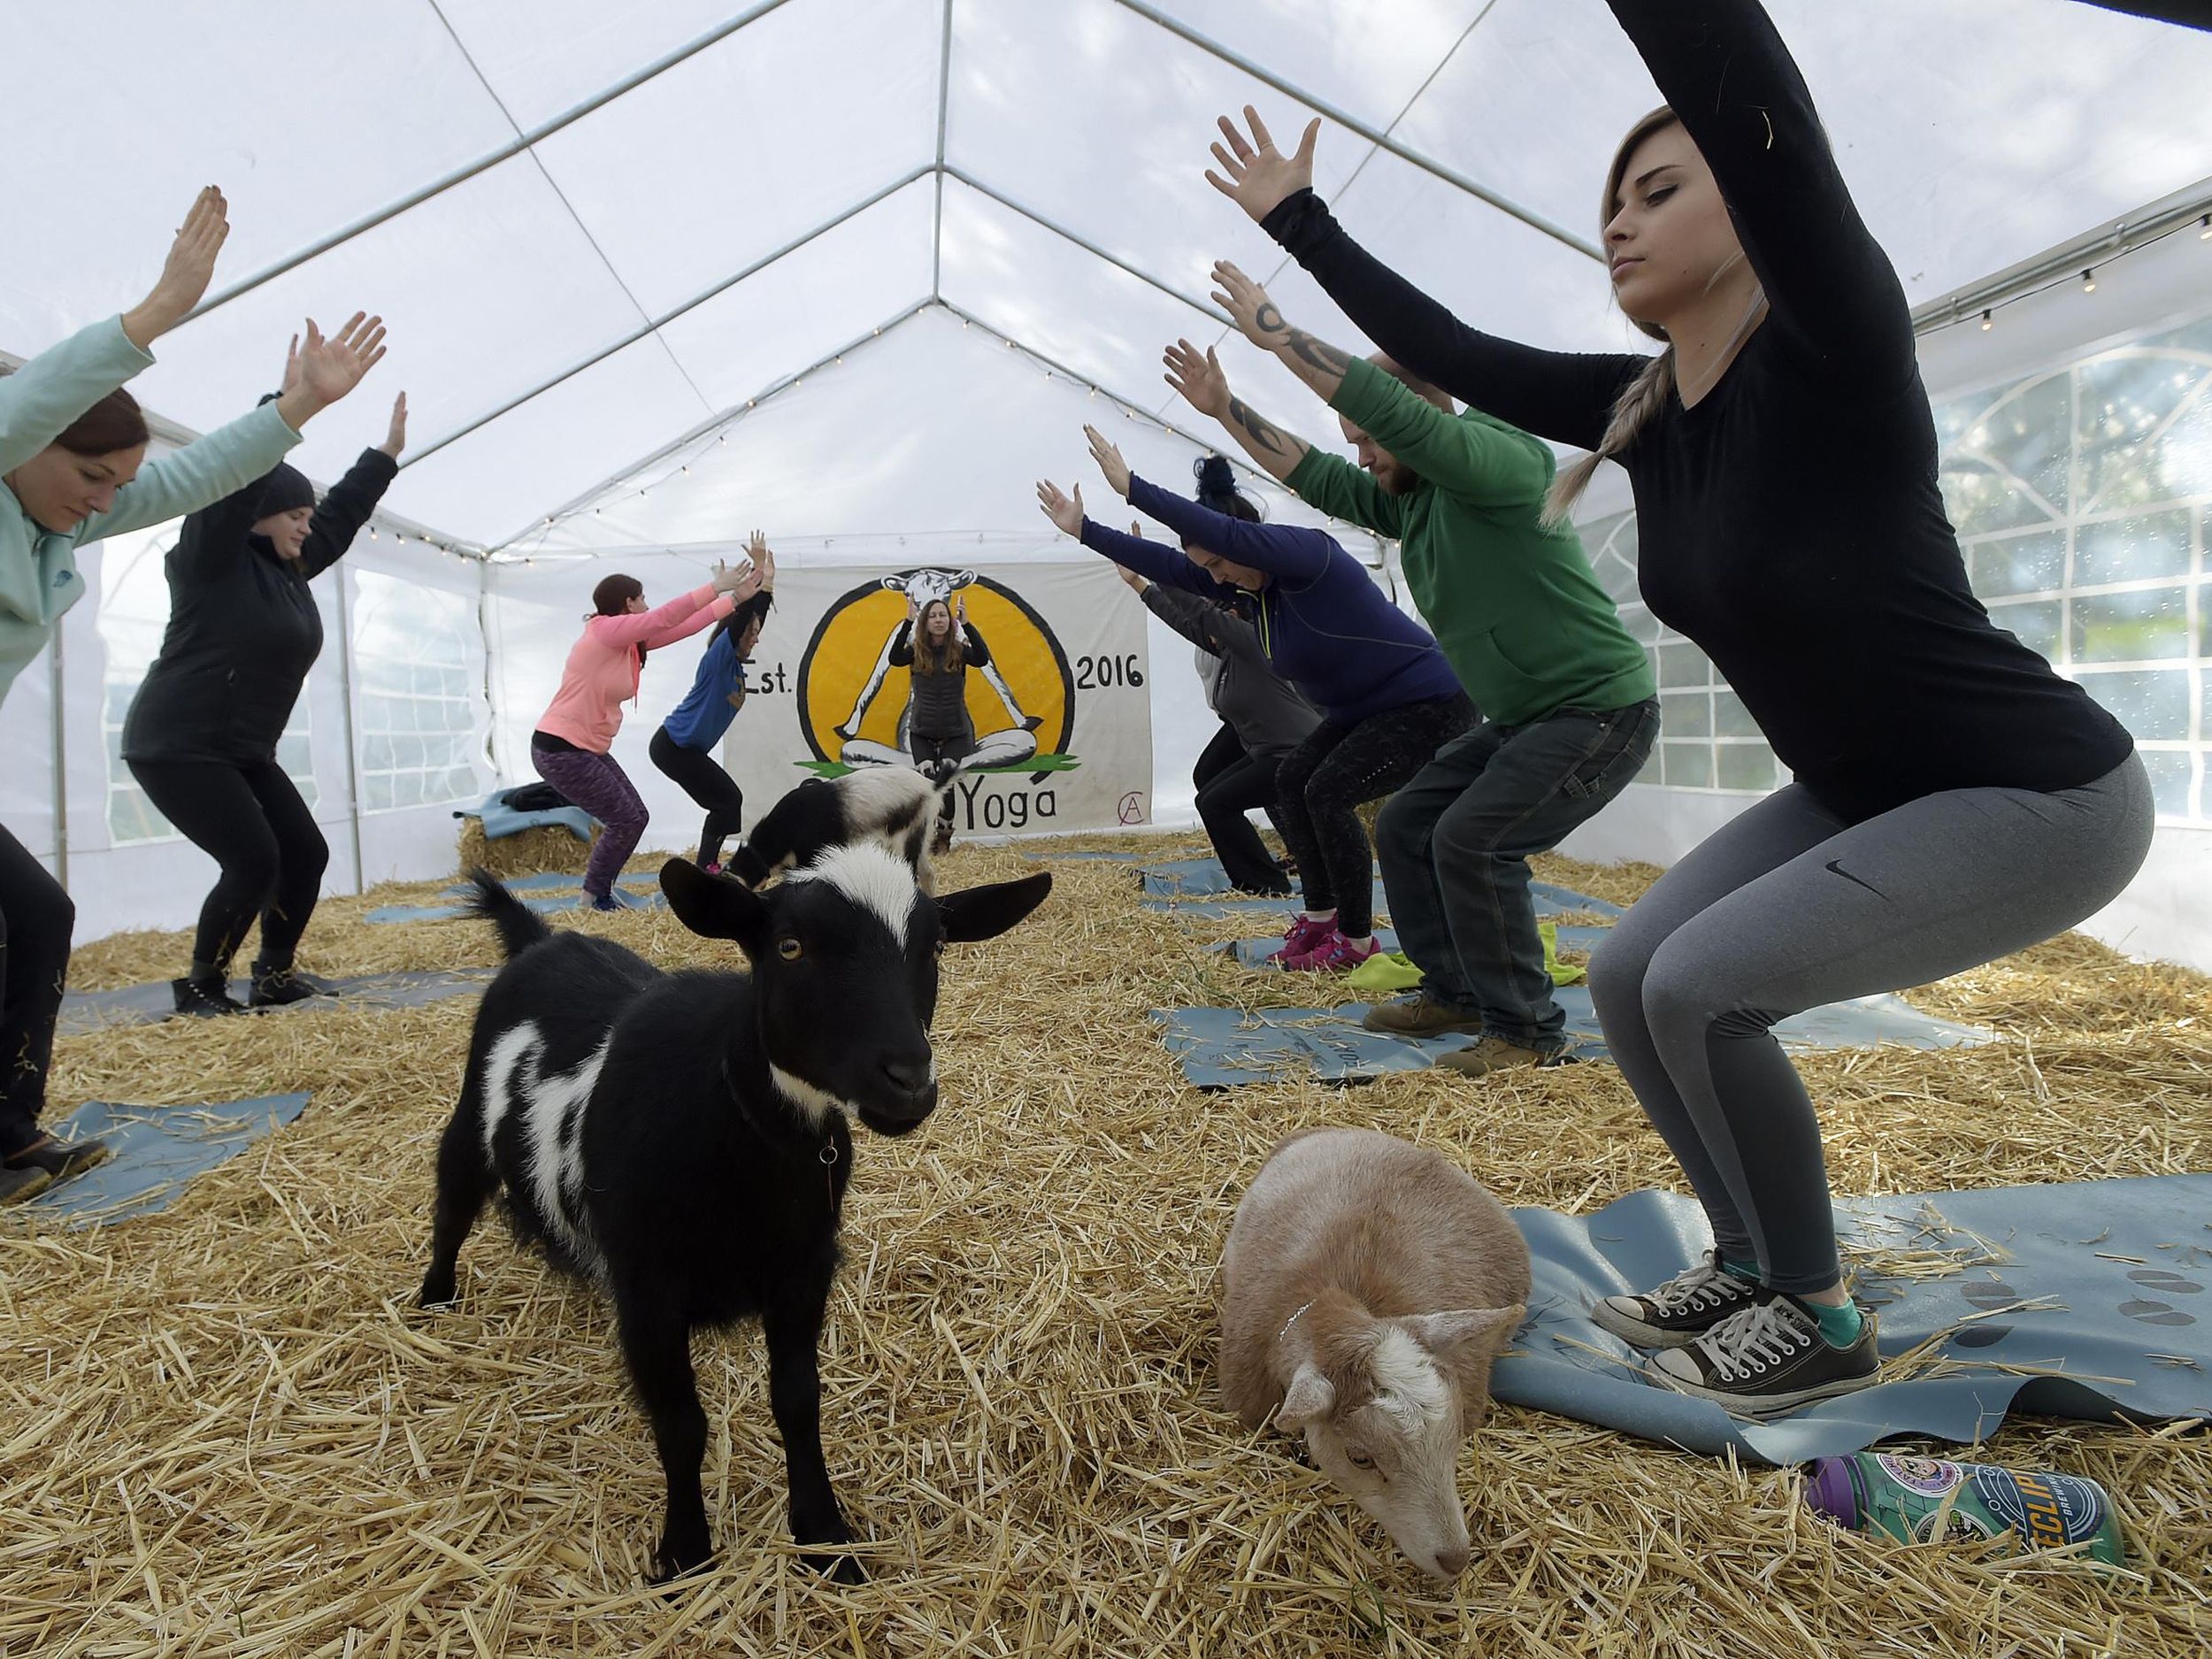 Goat yoga craze: Oregon yoga business goes viral